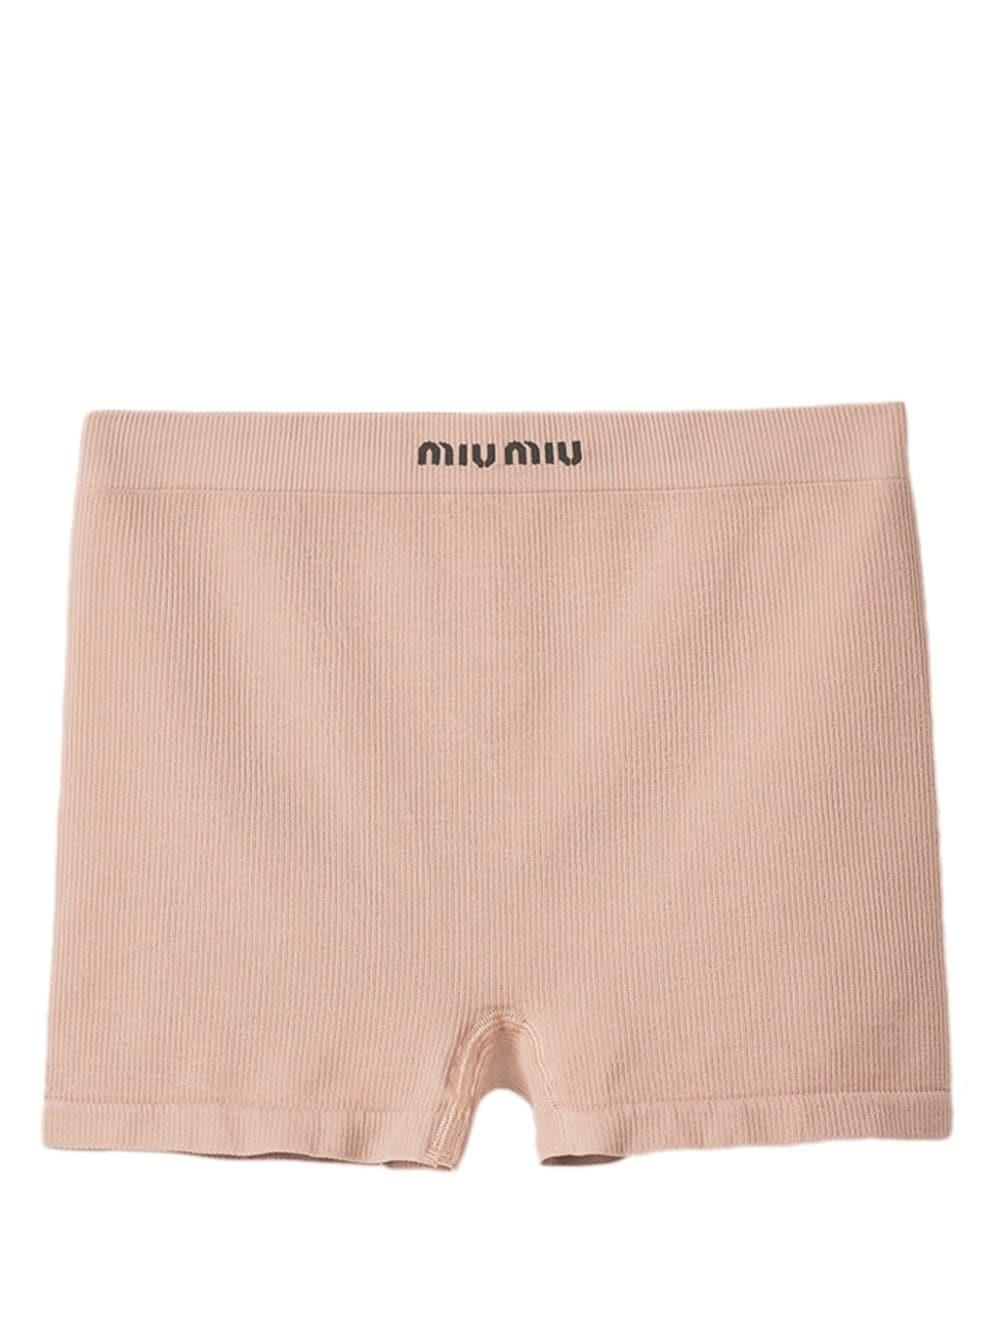 Miu Miu Seamless Ribbed Cotton Boxers in Pink